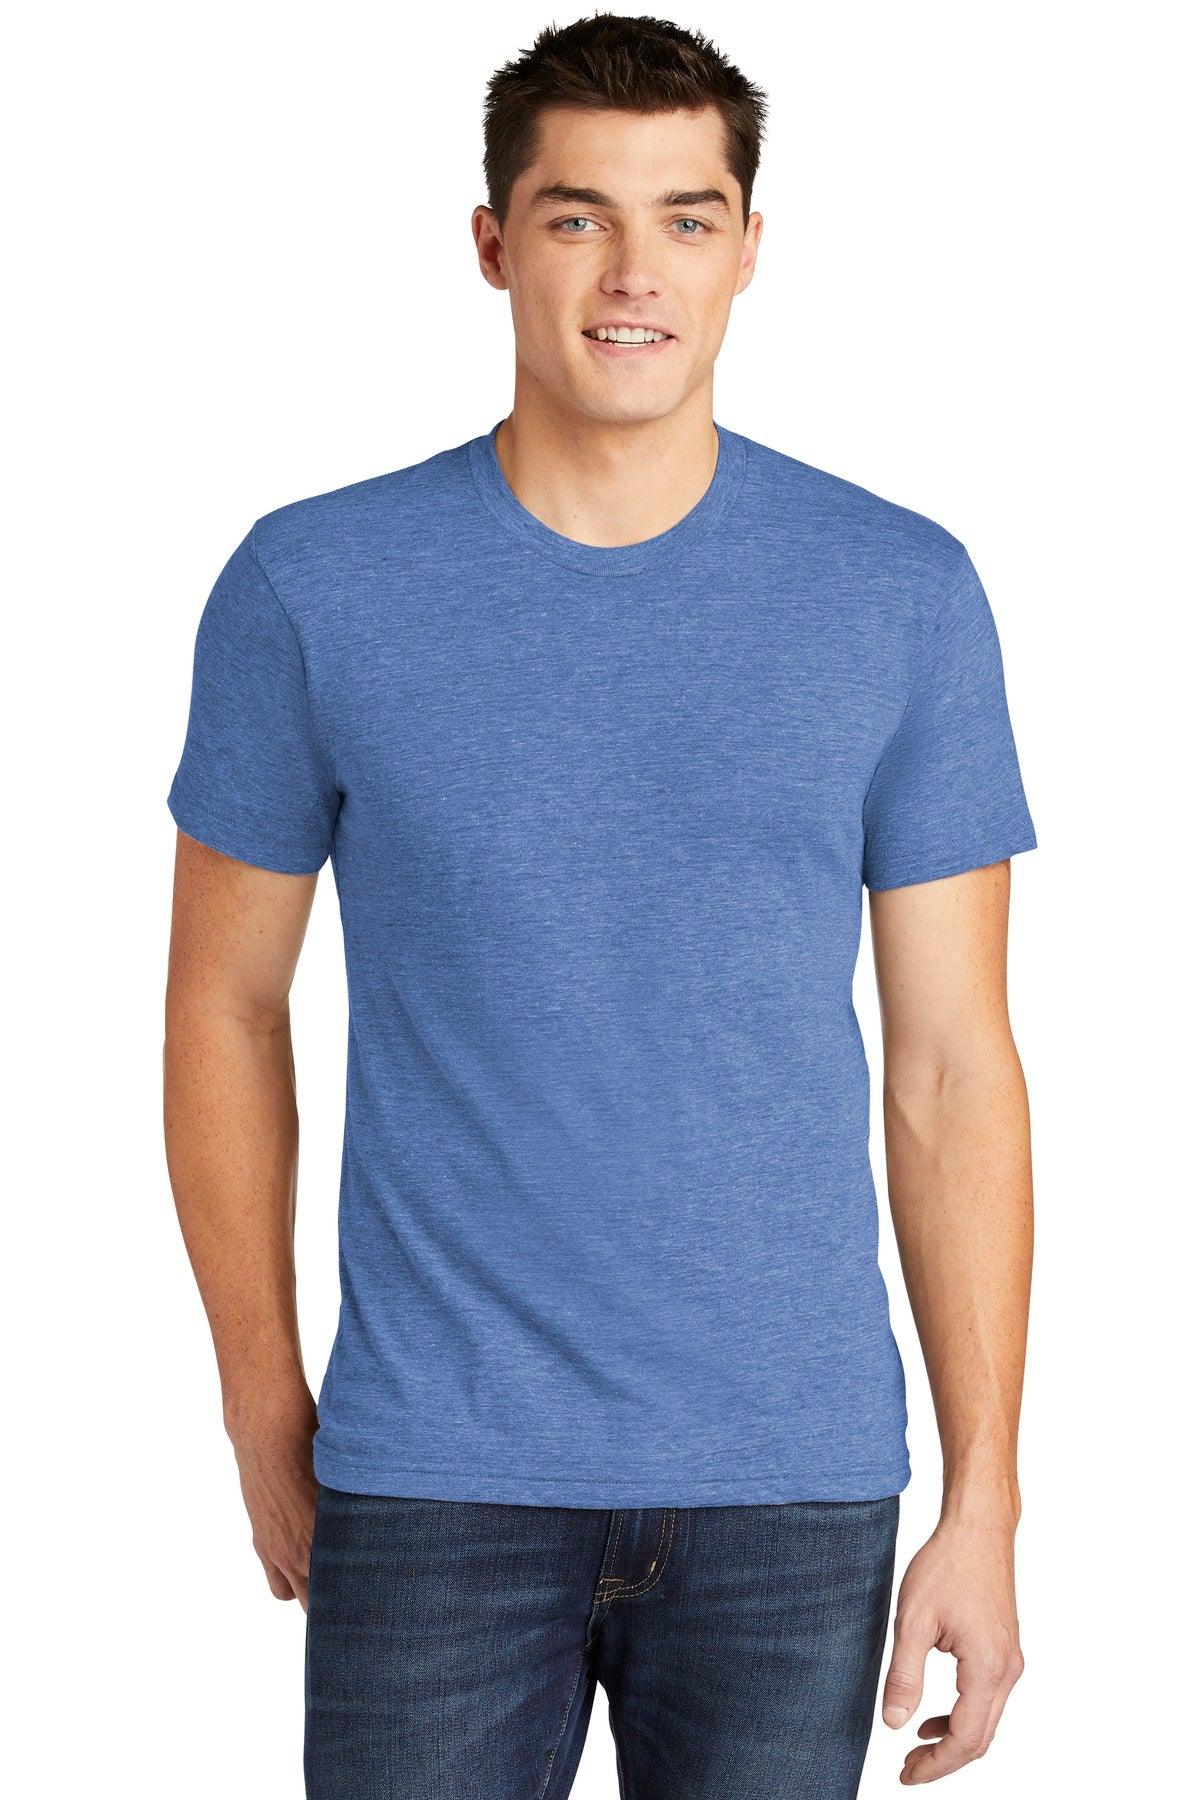 American Apparel Tri-Blend Short Sleeve Track T-Shirt. TR401W - Dresses Max